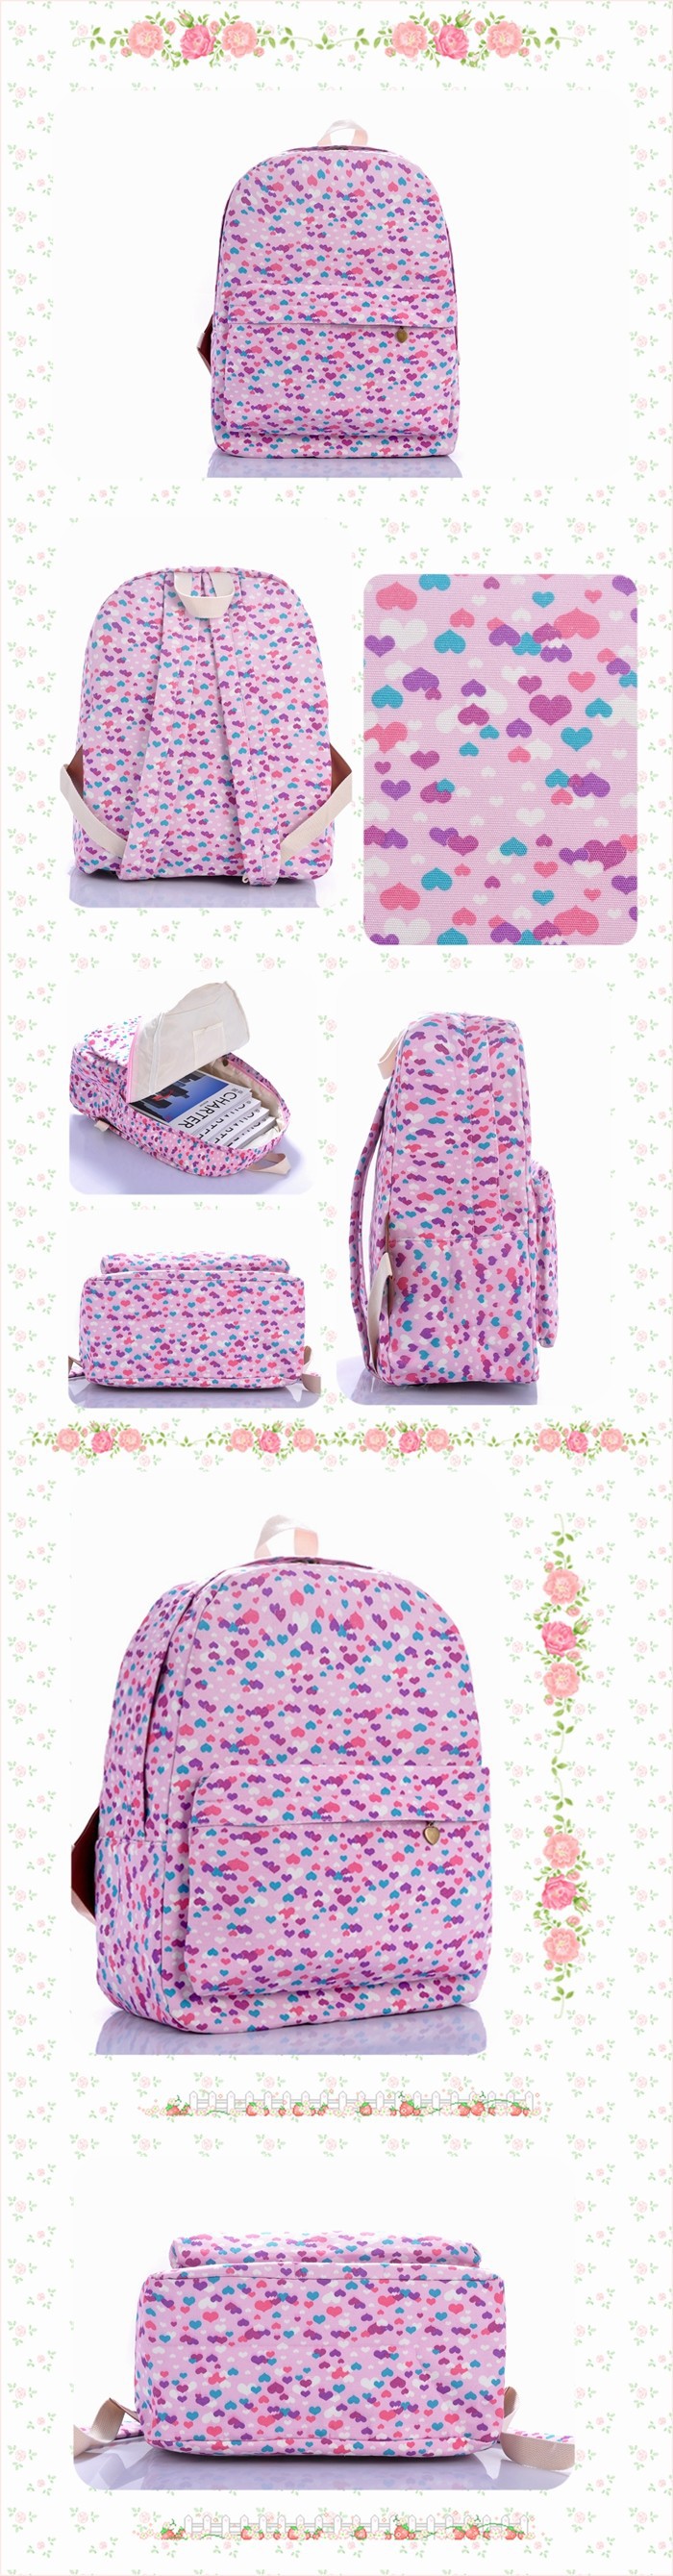 New-Lovely-printing-backpack-children-women-travel-bags-girl-cartoon-brand-shoulder-bags-canvas-school-backpack-bag-1